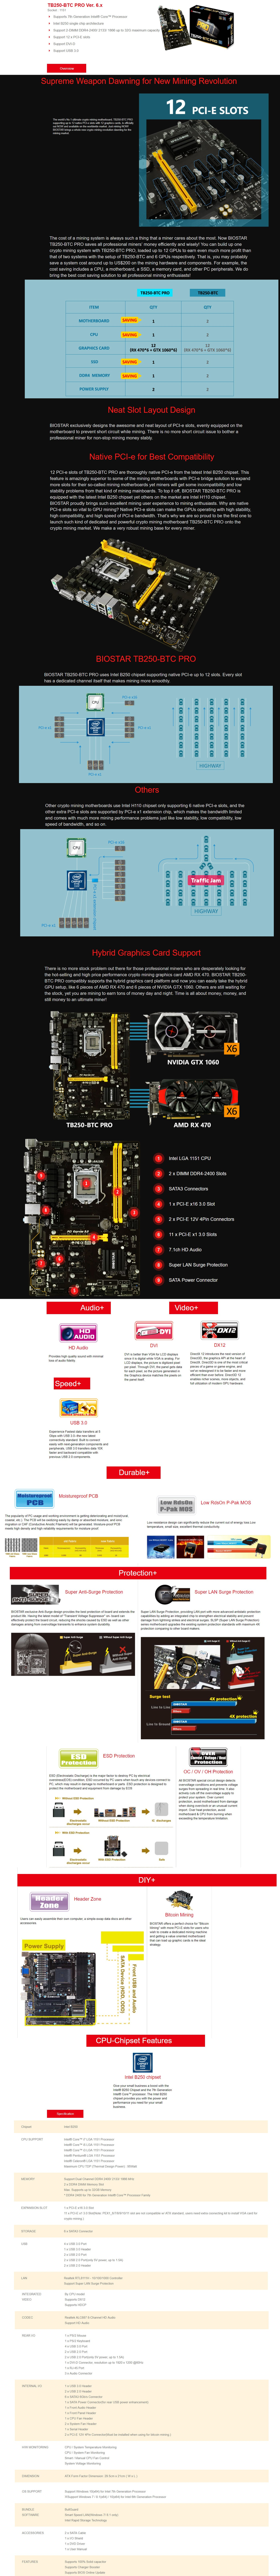 Biostar TB250-BTC Pro 32GB DDR4 Intel Motherboard features